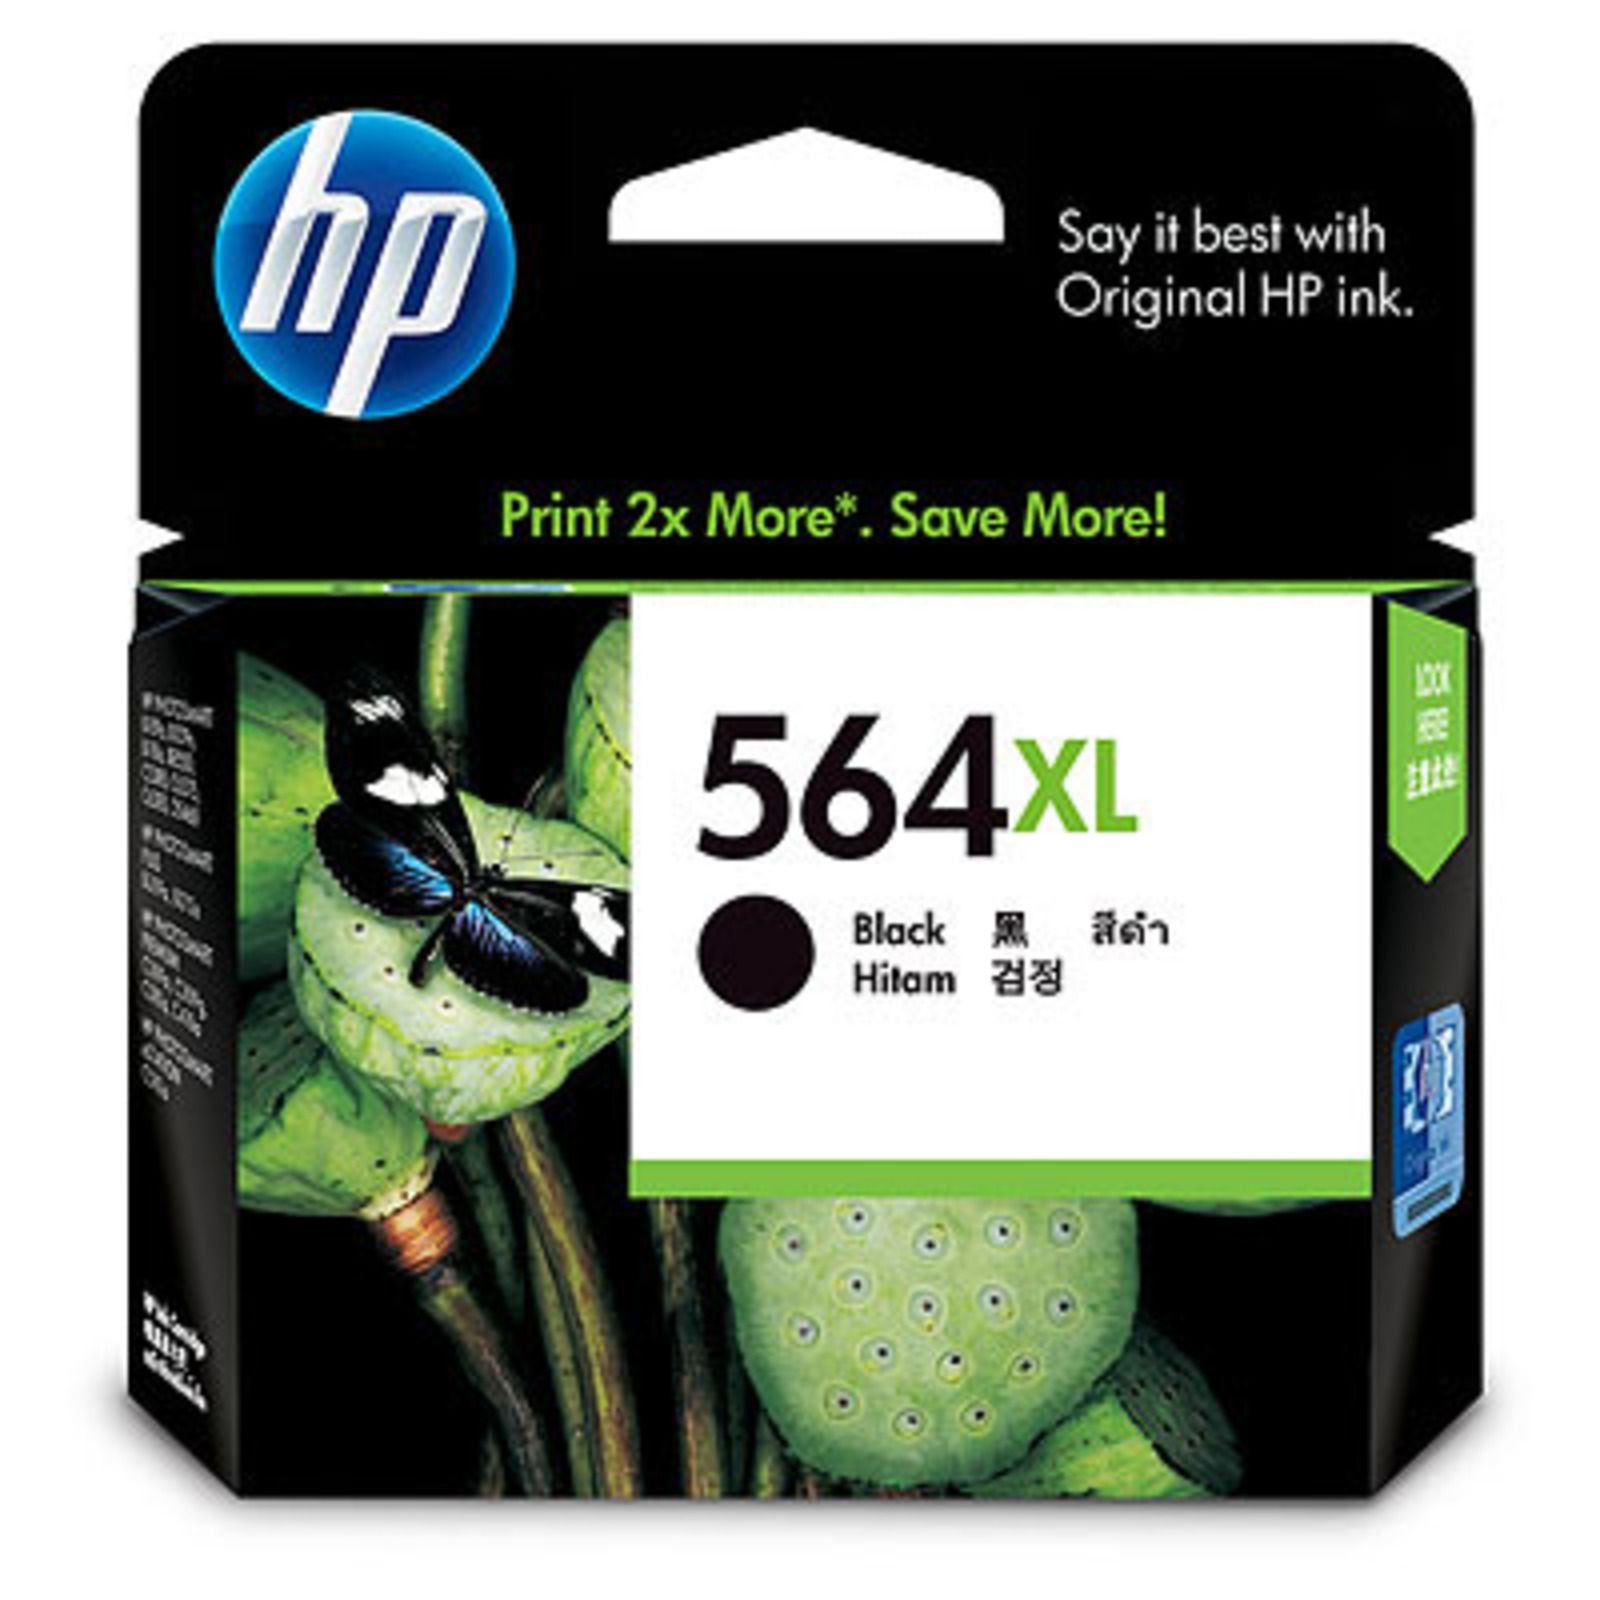 HP 564XL Ink Cartridges (Black/Cyan/Magenta/Yellow) - GIT, HP, INK CARTRIDGES, PRINTING, SALE